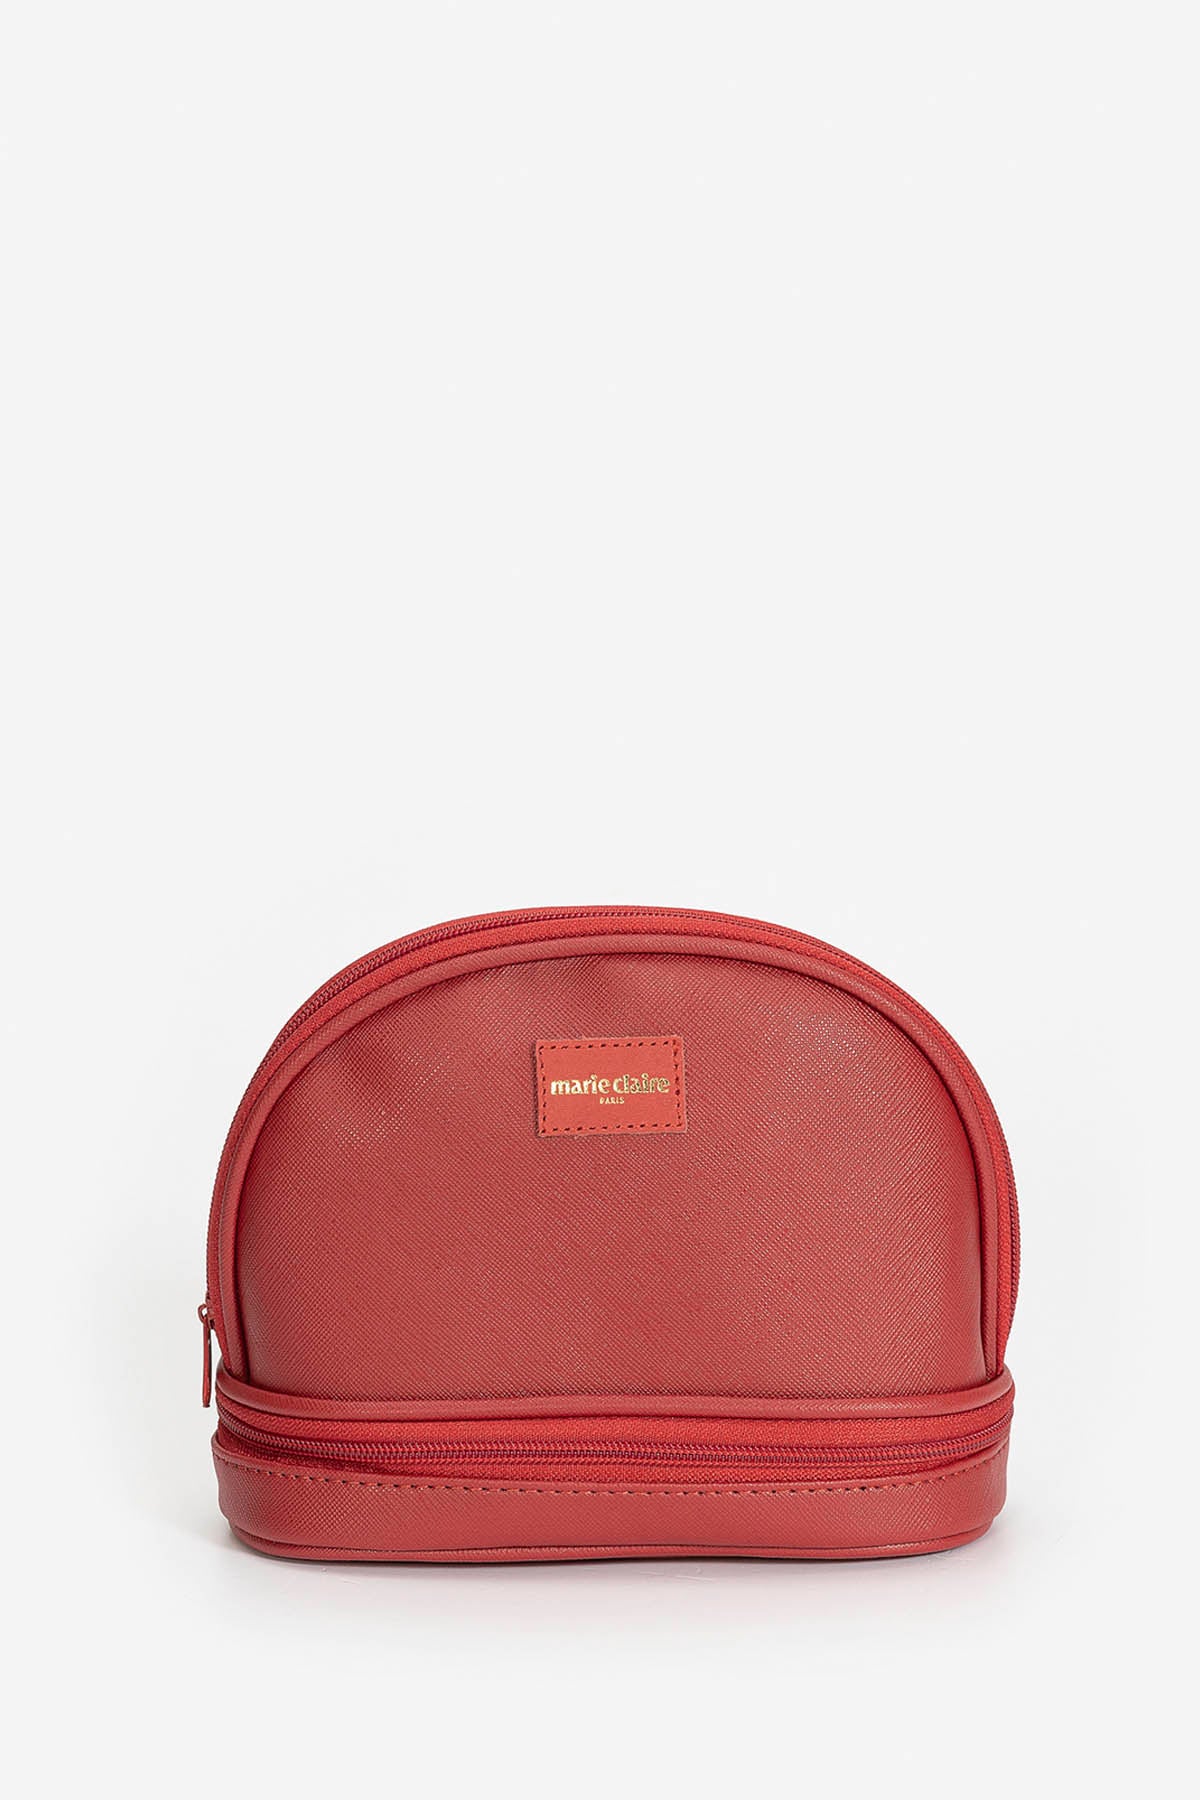 Marie Claire Handbags - Buy Marie Claire Handbags online in India